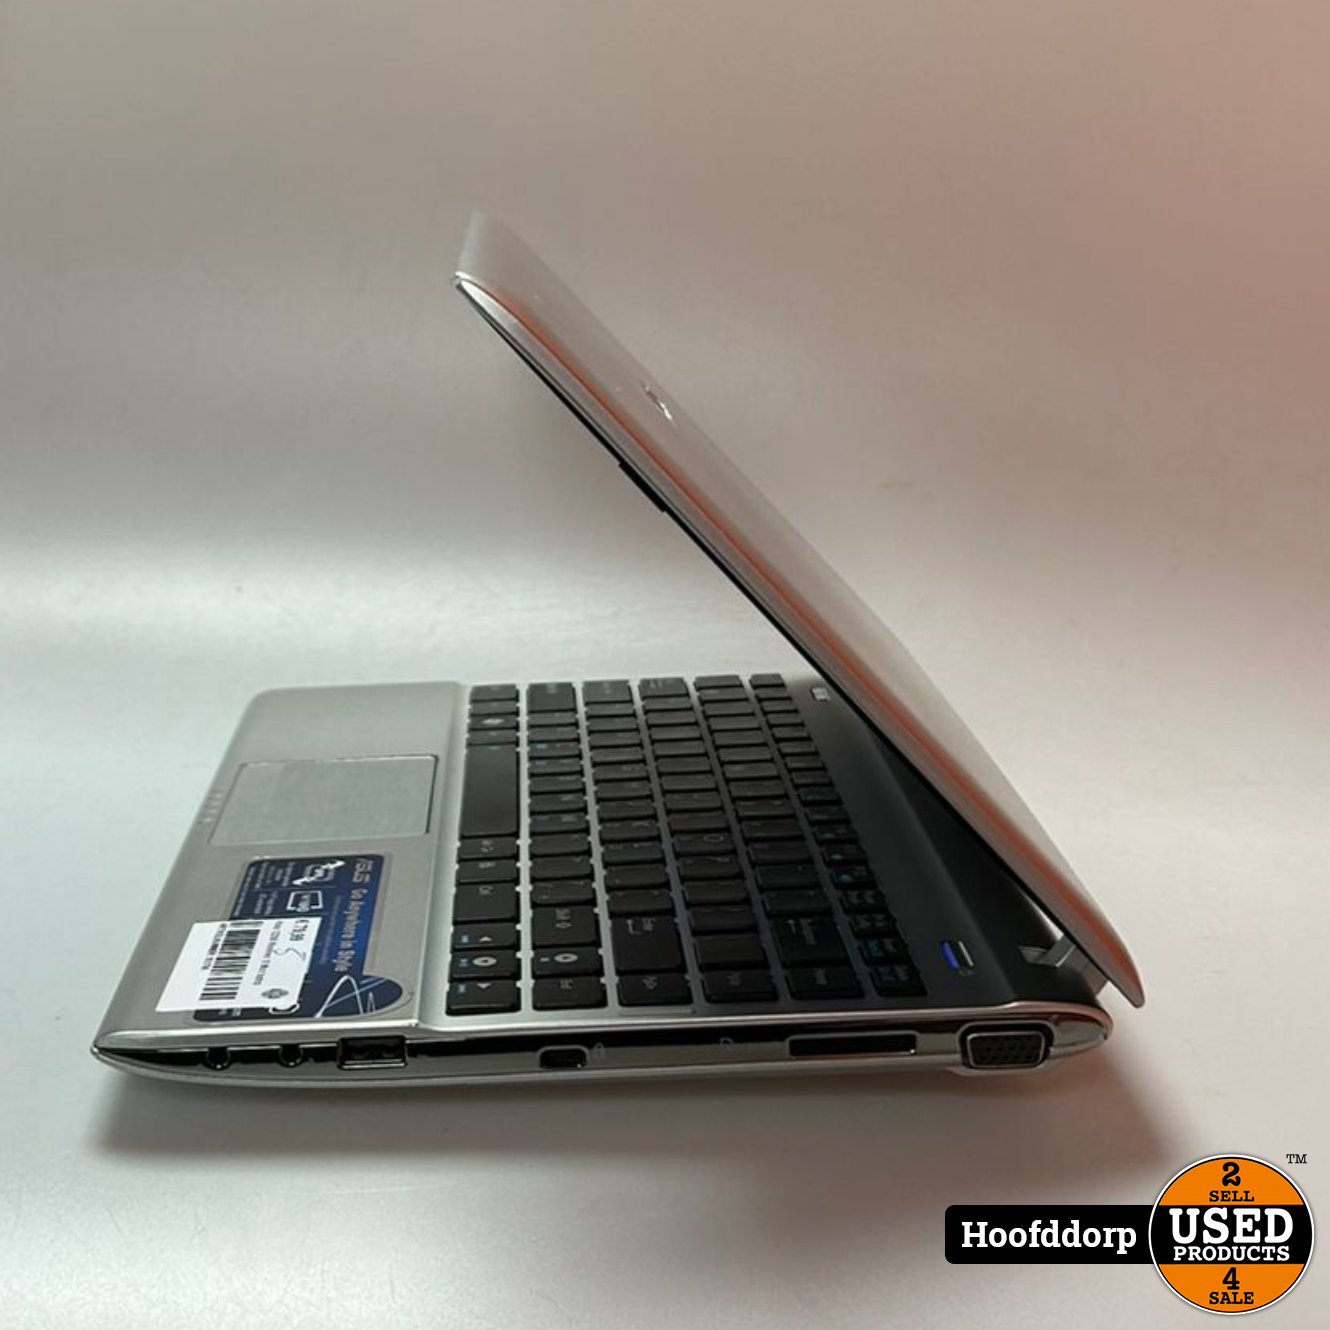 dinsdag Overtreding wijsvinger Asus 1225B Windows 10 Mini laptop - Used Products Hoofddorp